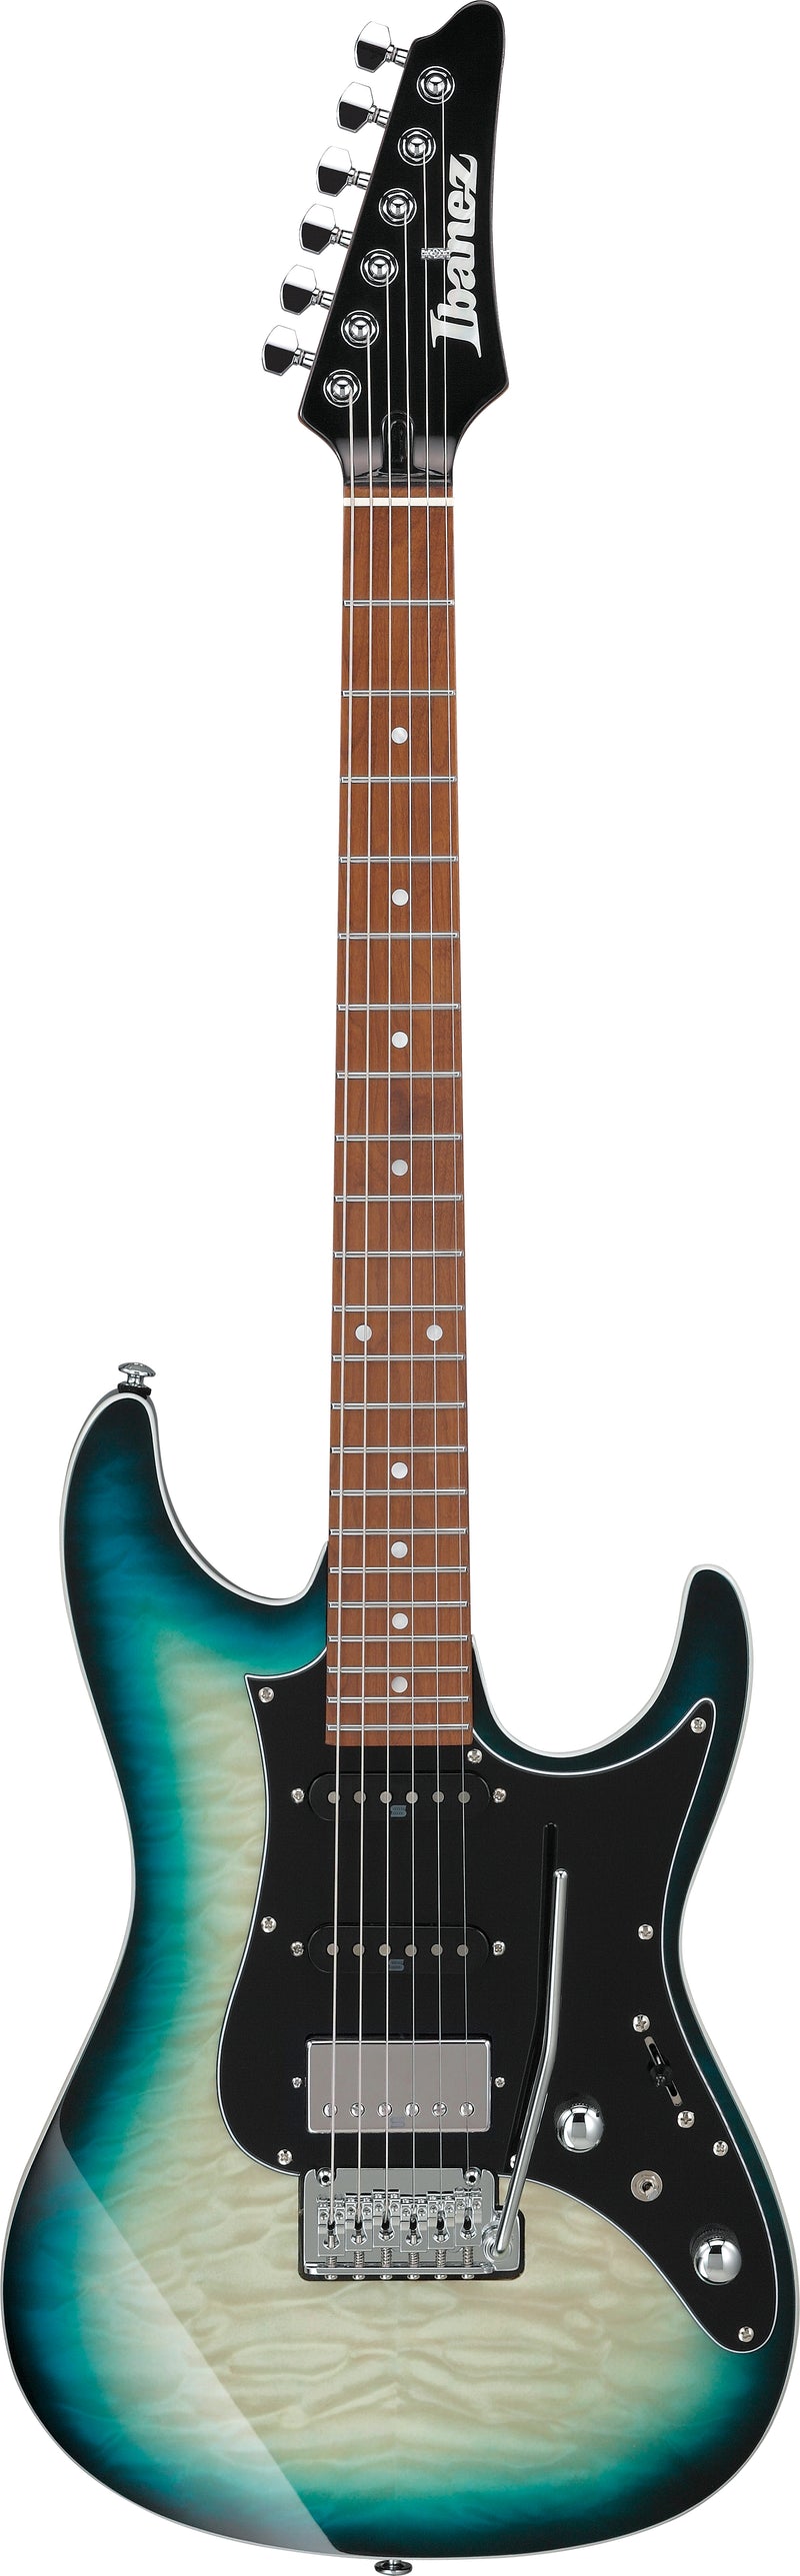 Ibanez AZ Premium Electric Guitar (Deep Ocean Blonde)